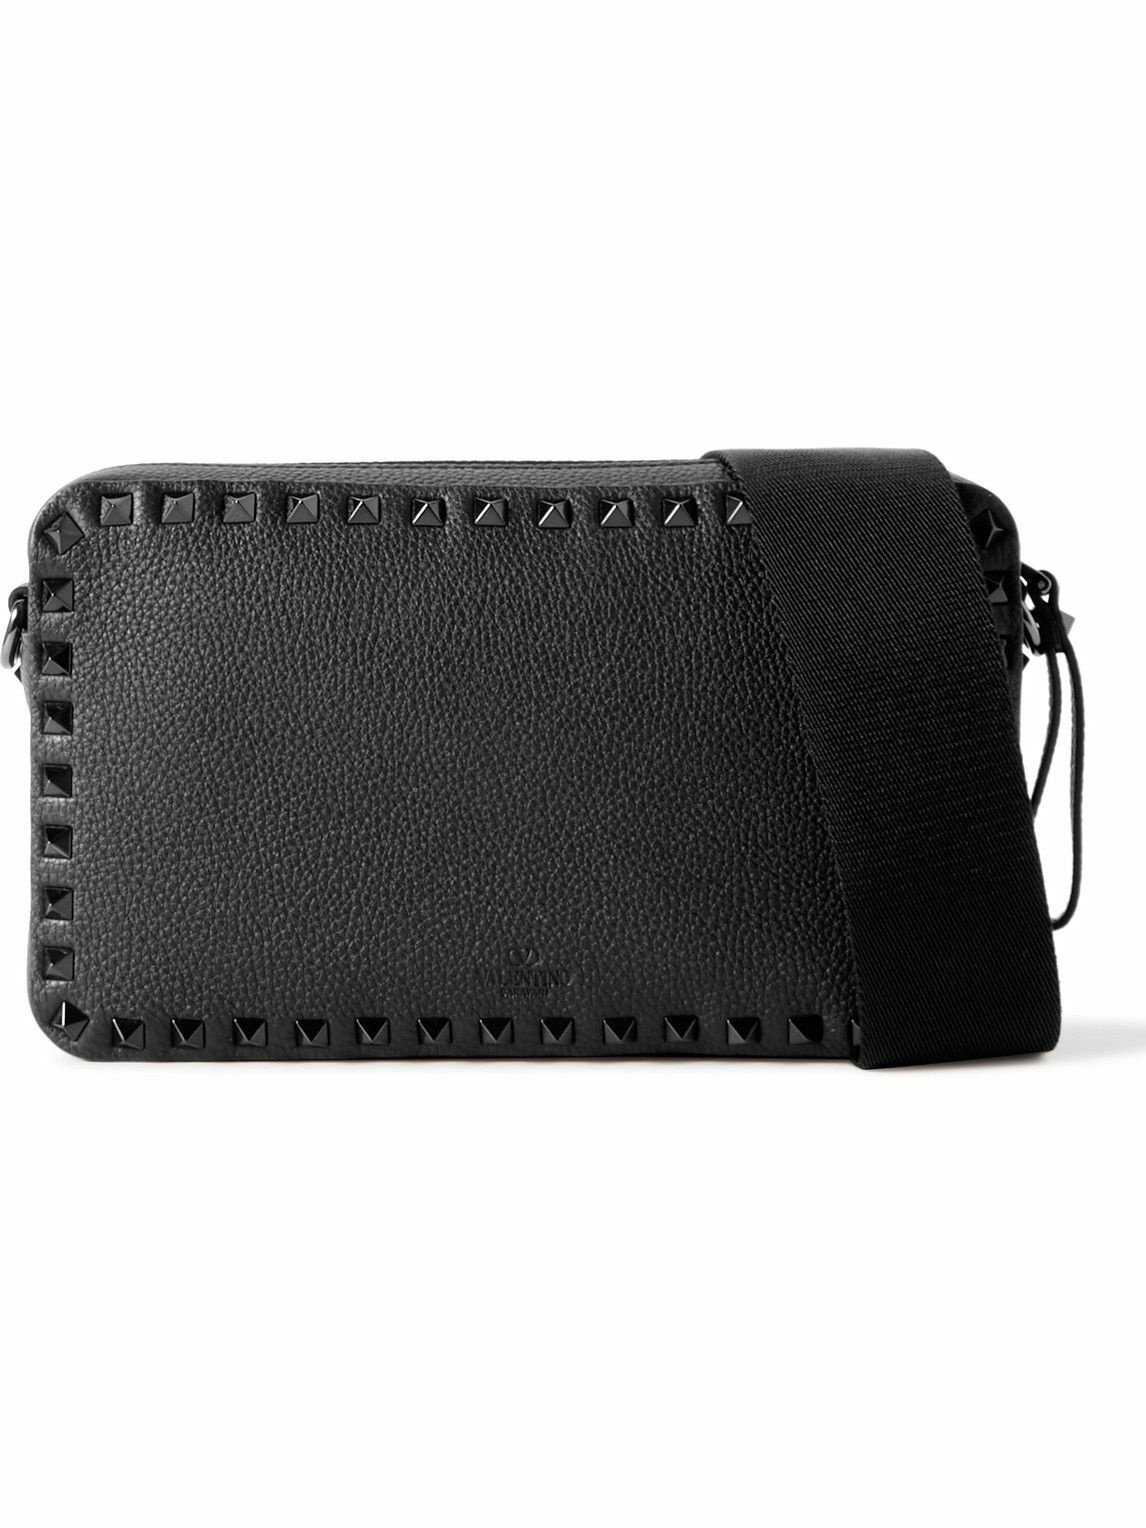 VALENTINO GARAVANI: Rockstud bag in grained leather with studs